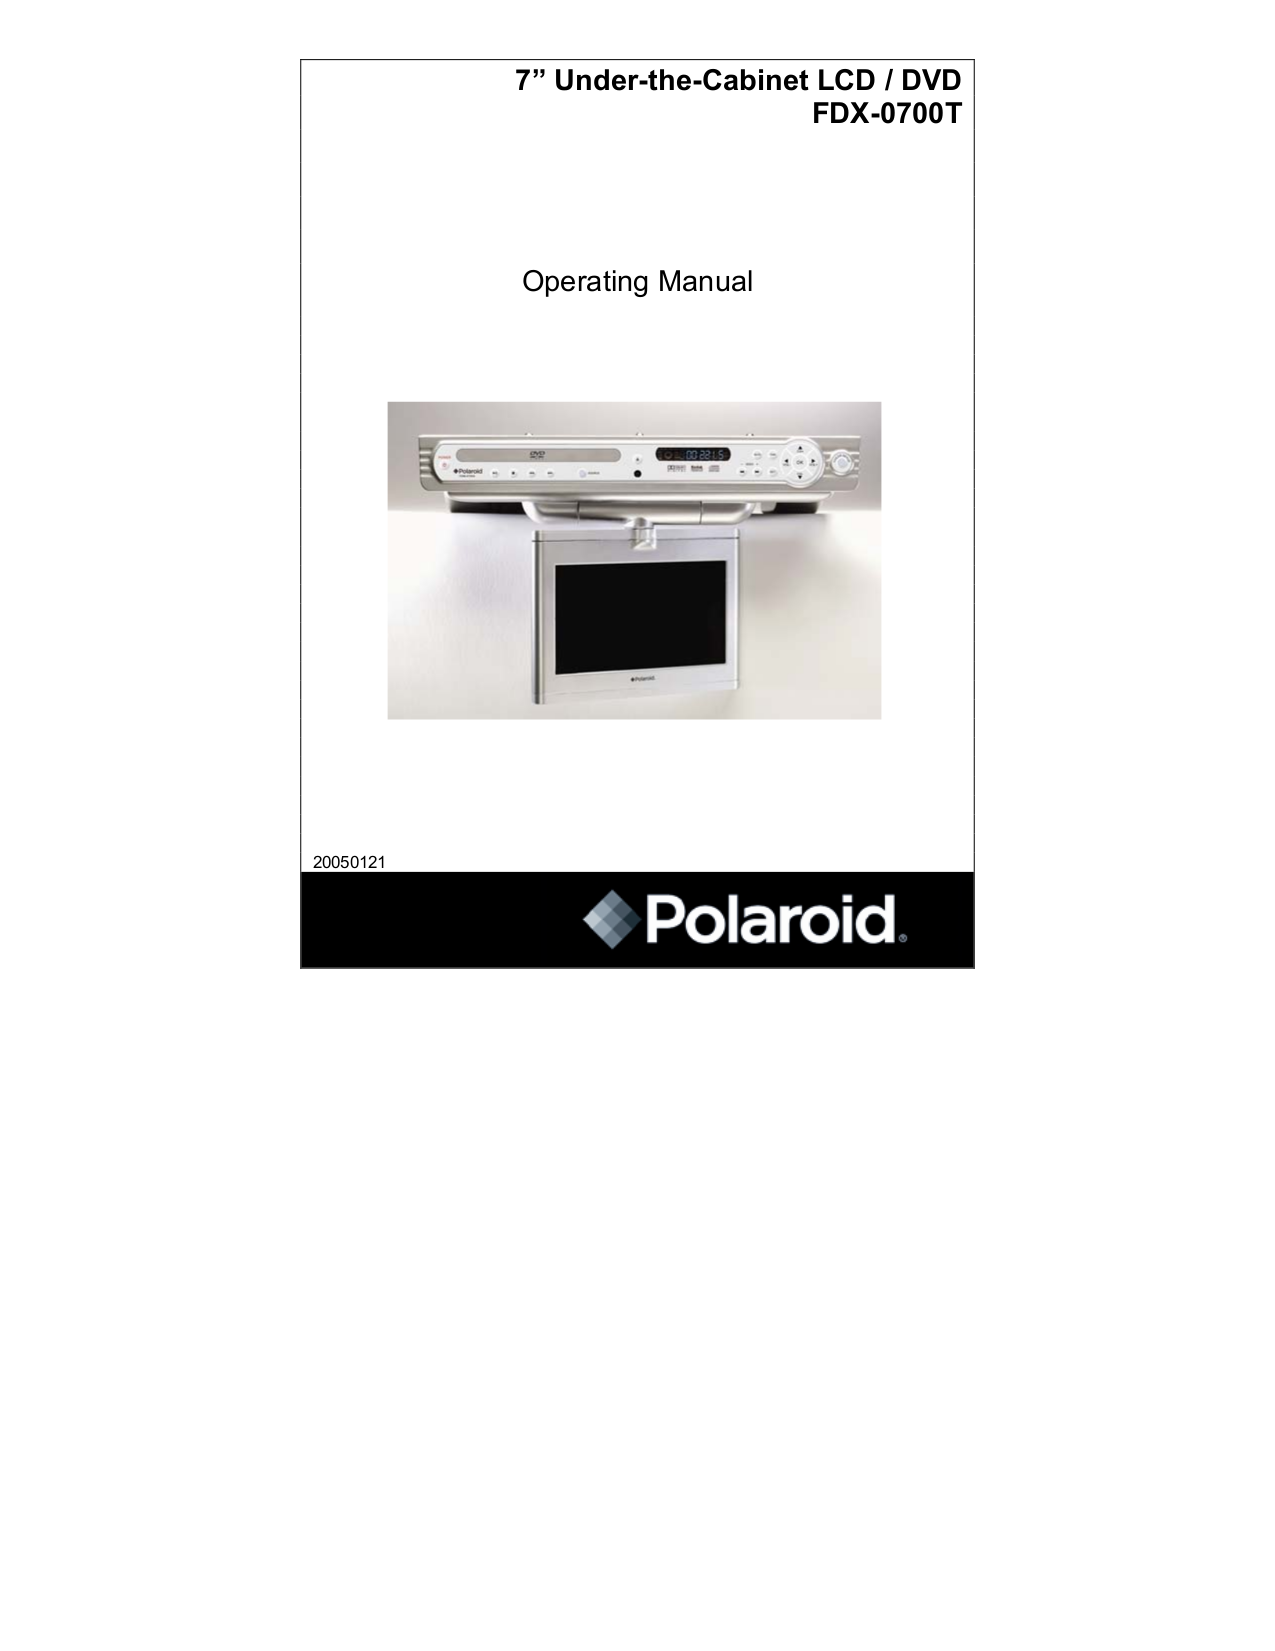 polaroid tv manual